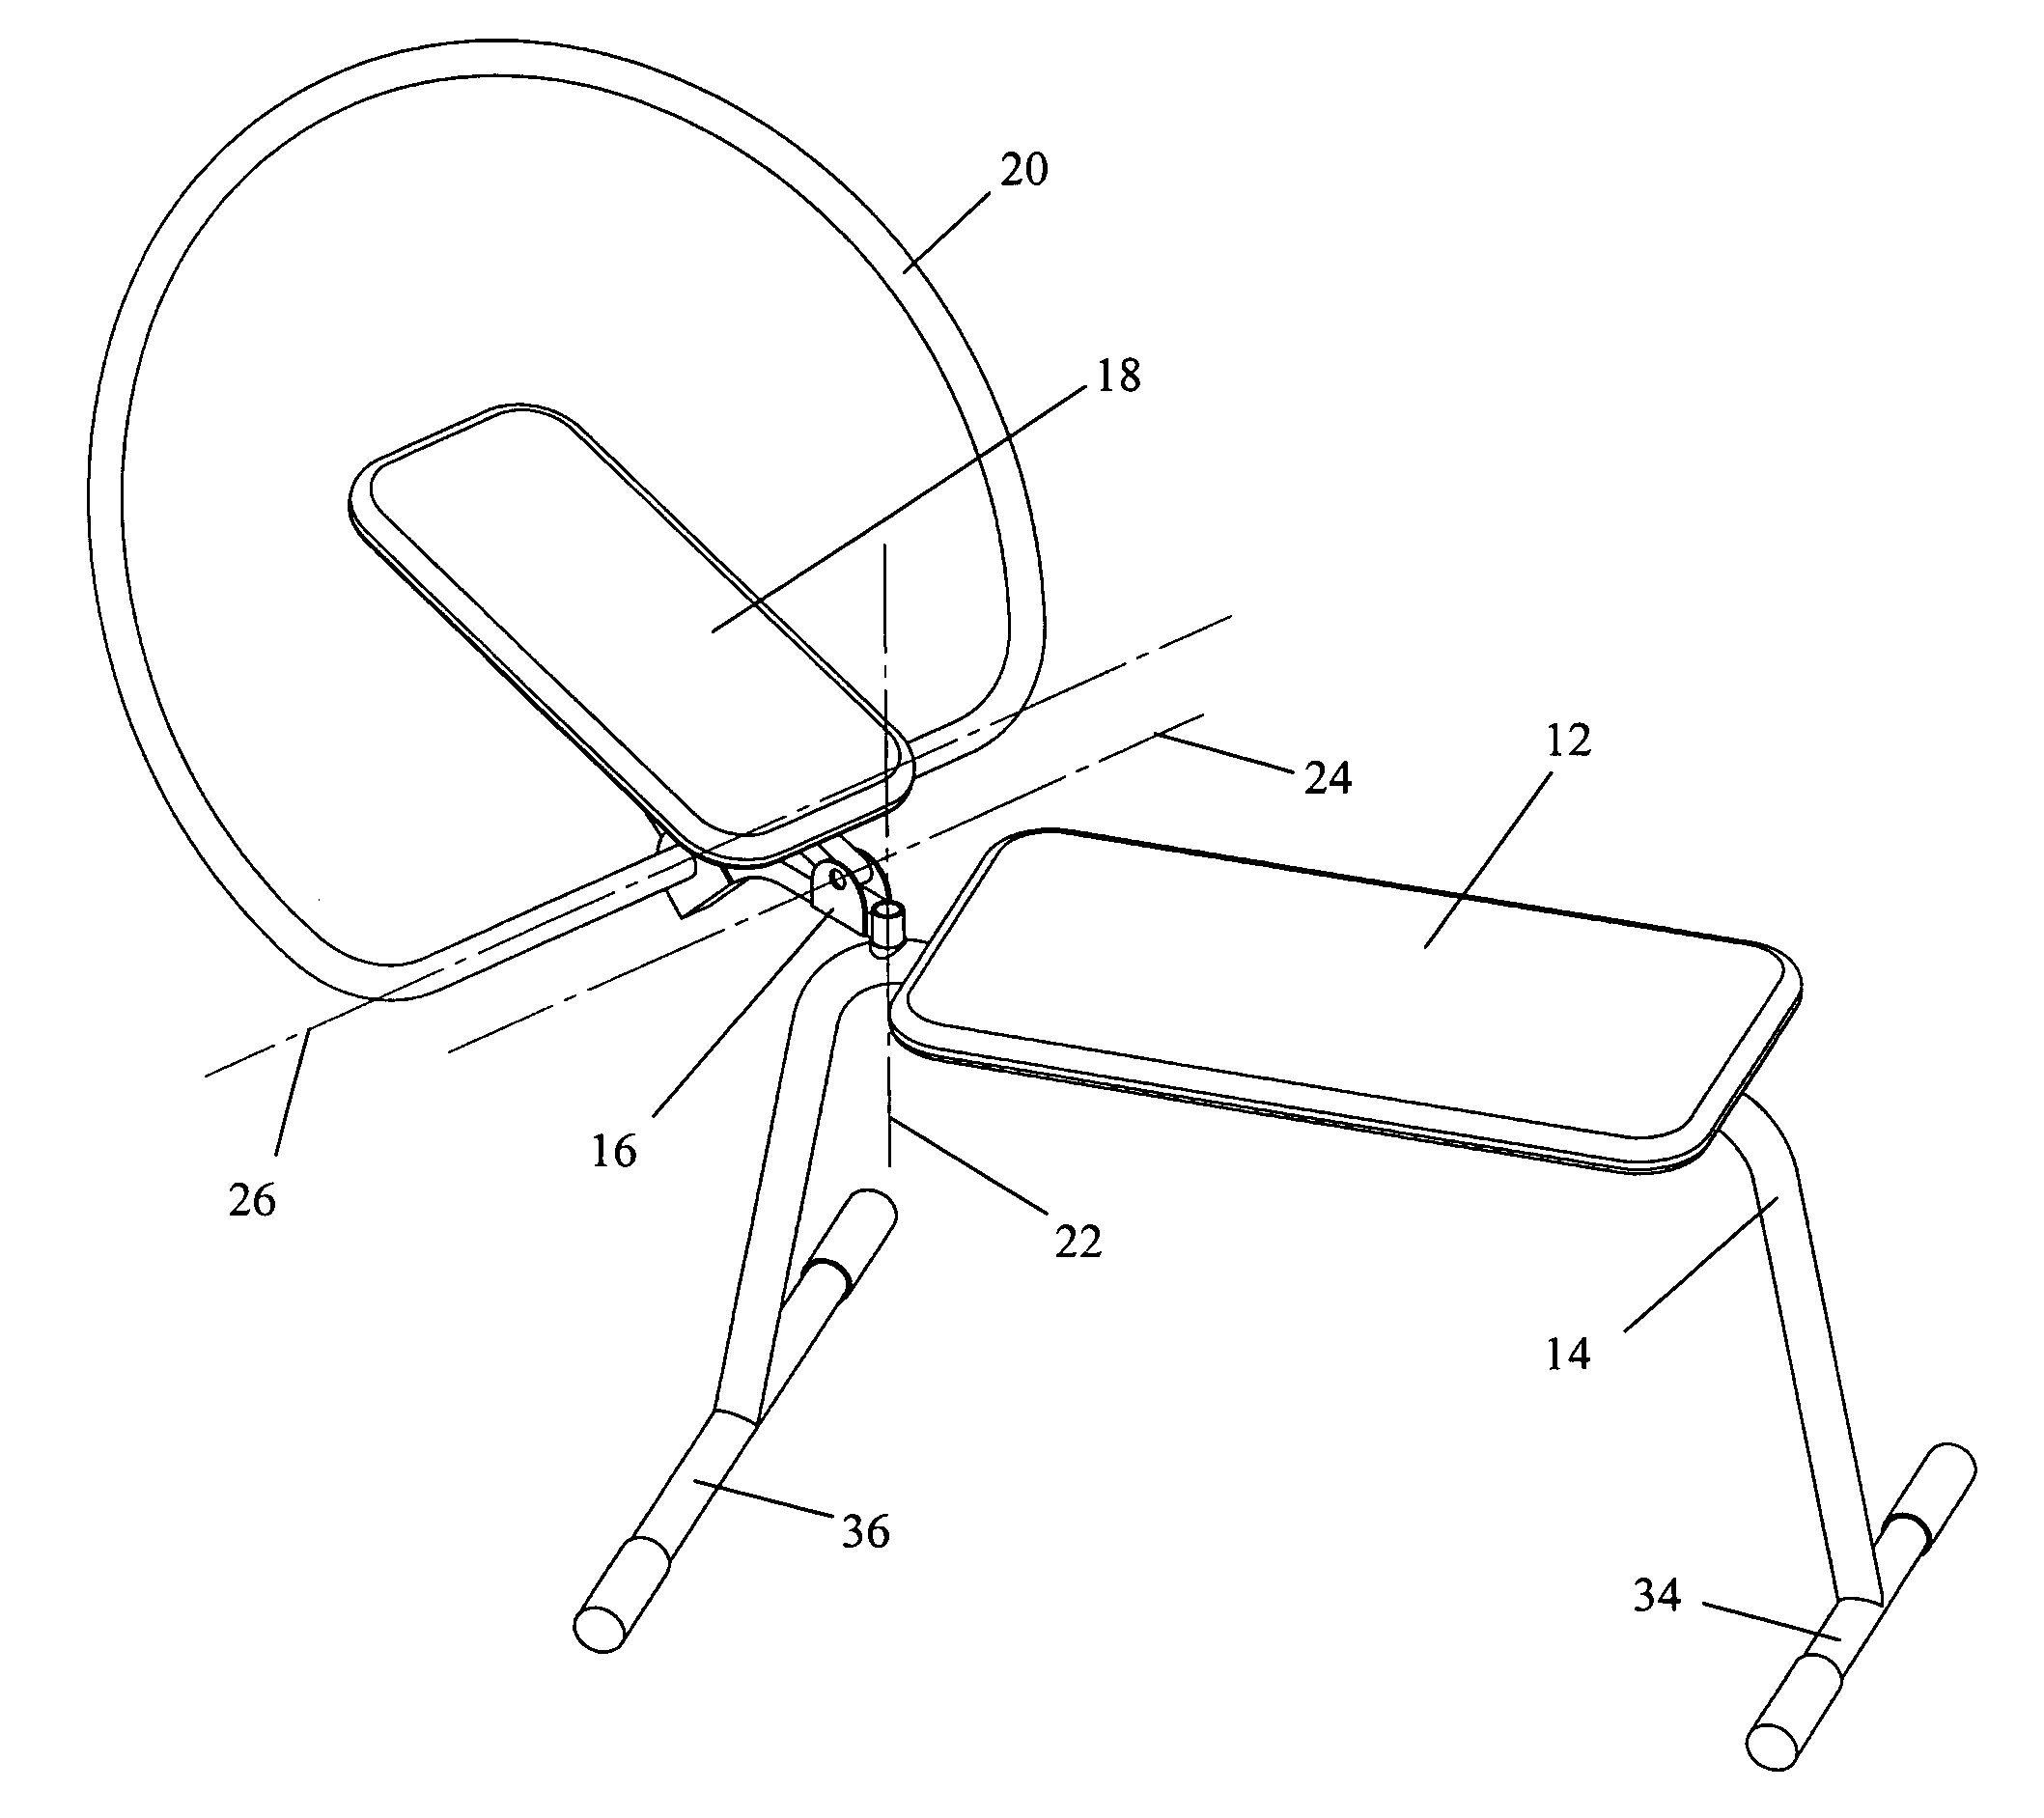 Abdominal exercise apparatus